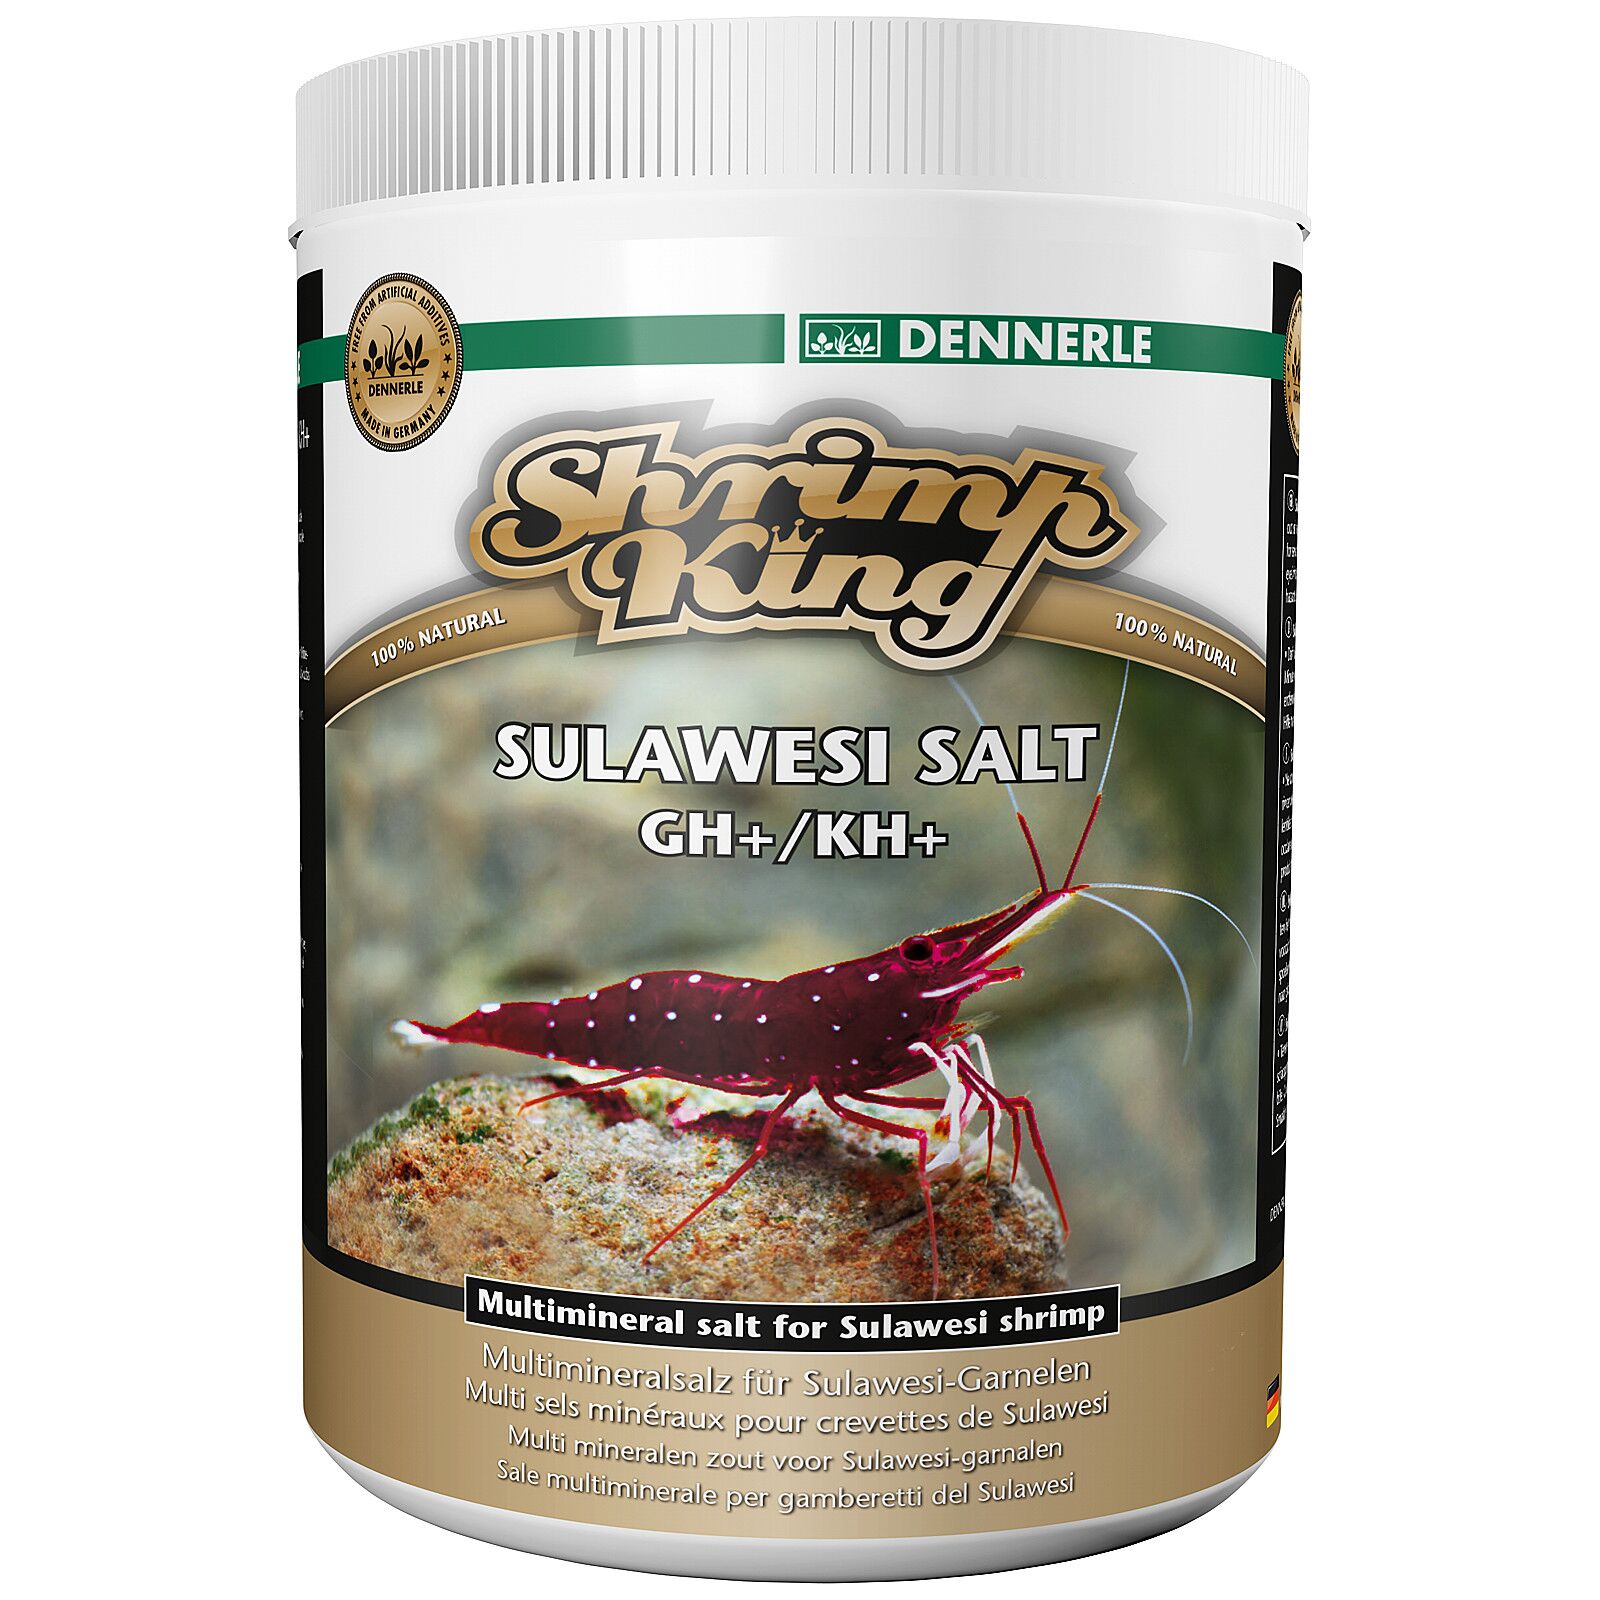 Dennerle - Shrimp King - Sulawesi Salt GH+/KH+